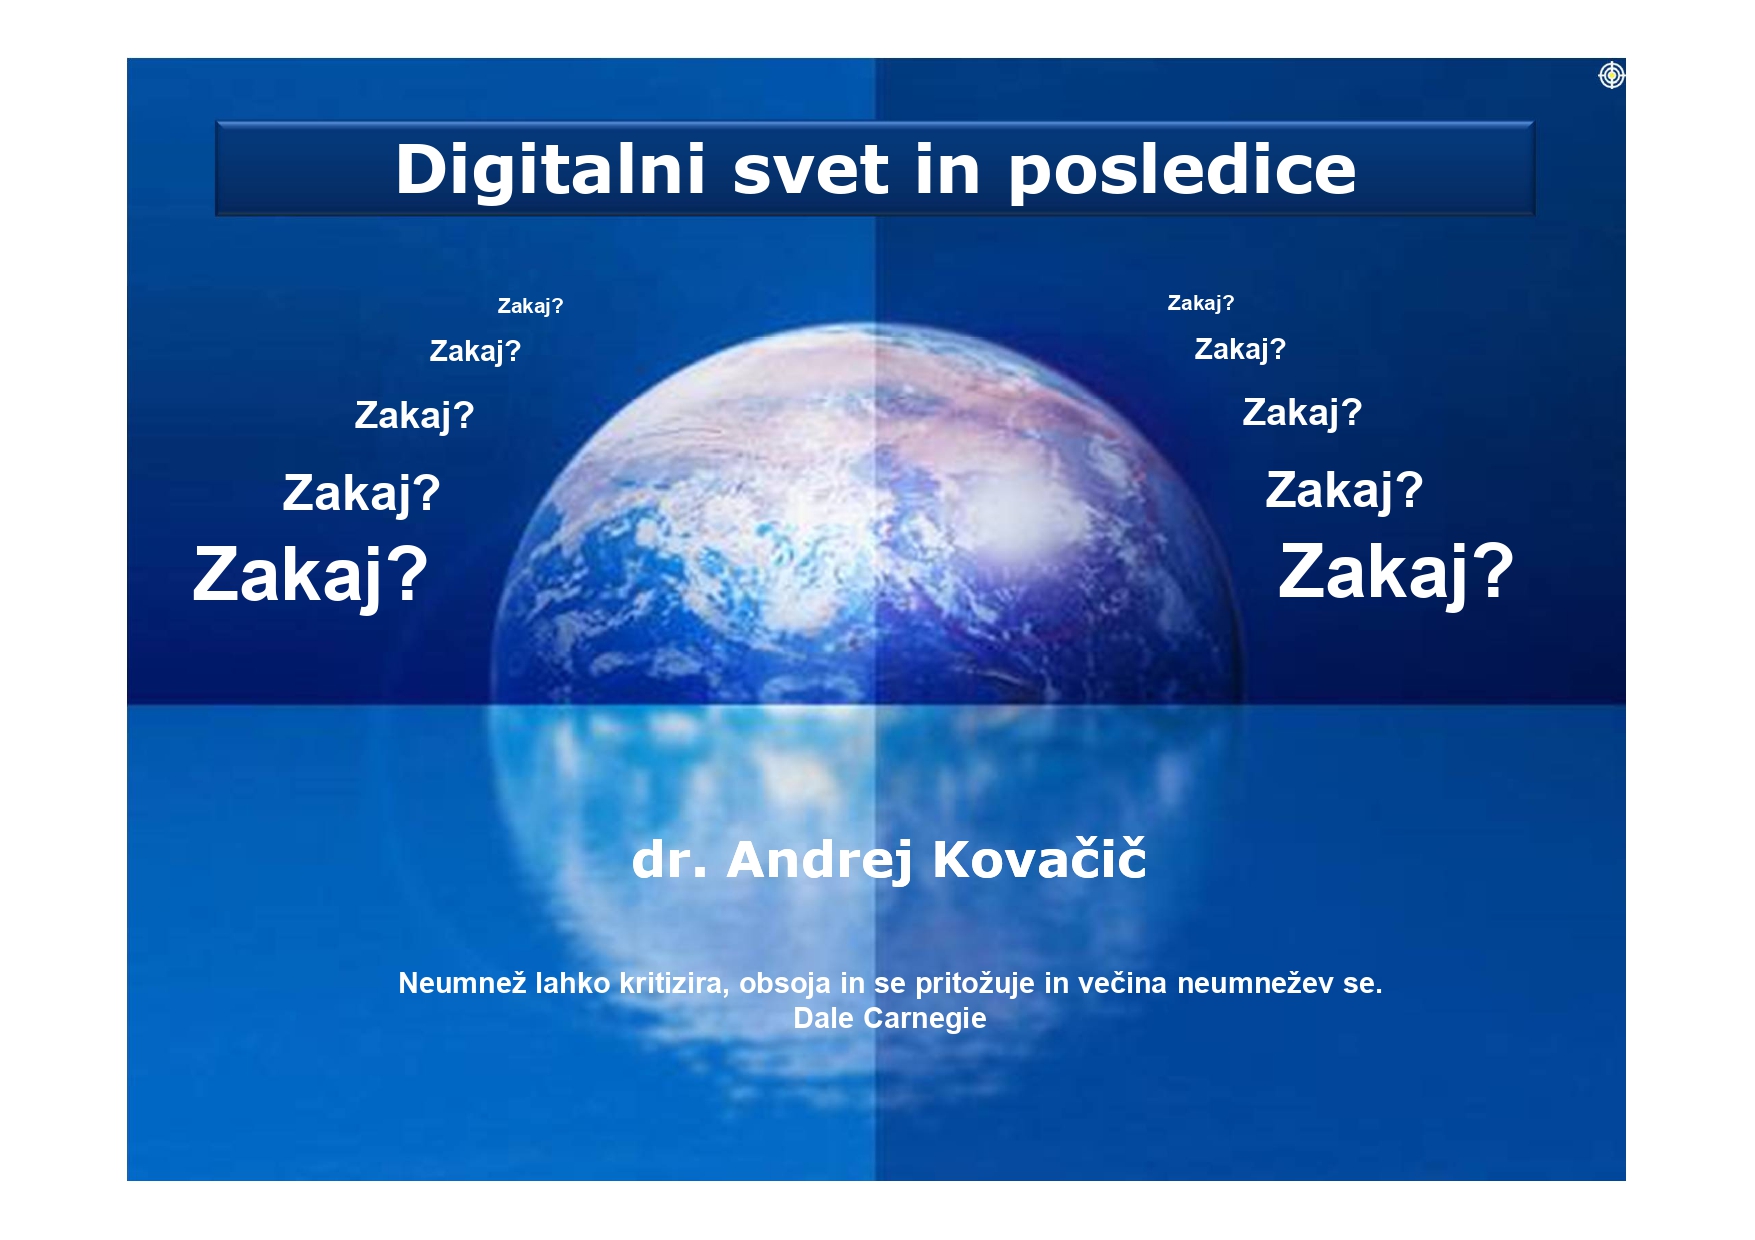 nijz_digitalni_mediji-gradivo-1_page-0001